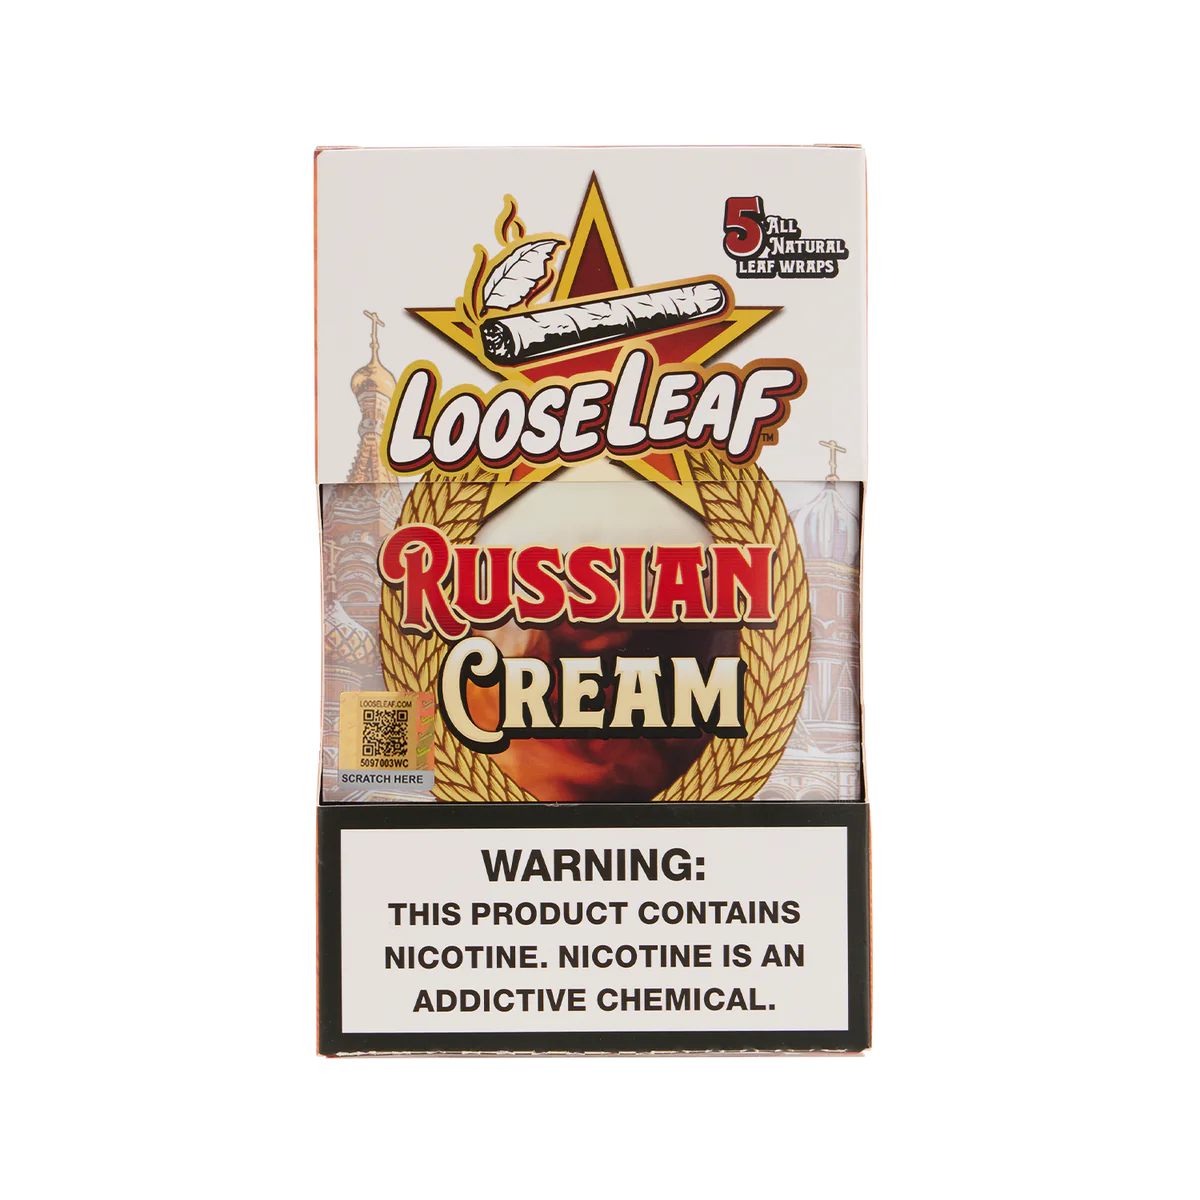 Looseleaf Russian Cre